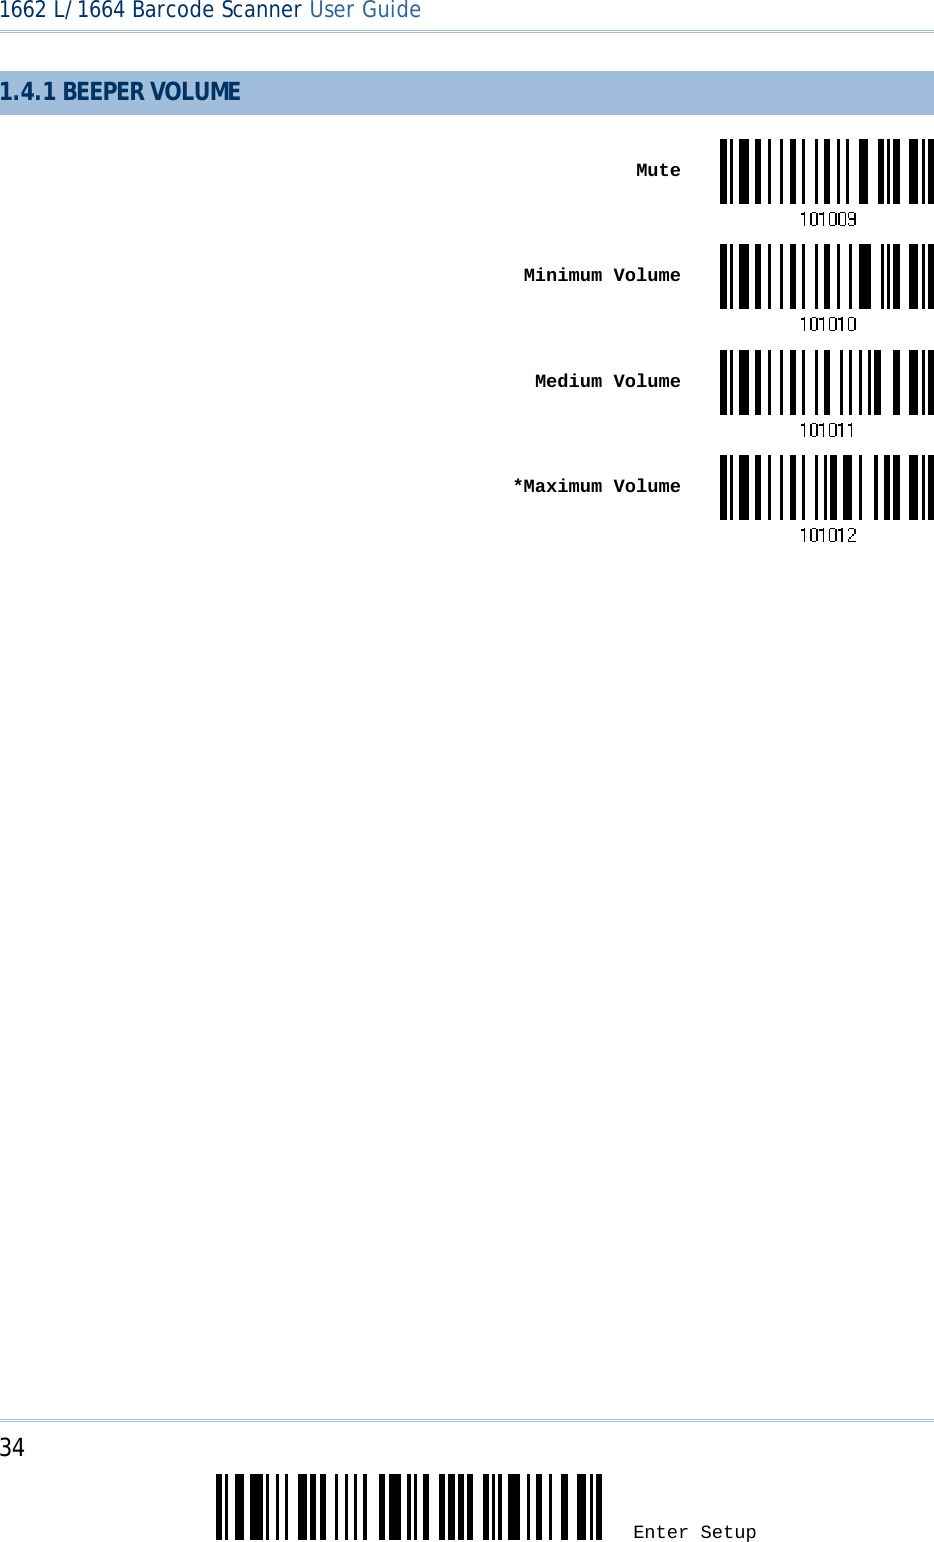 34 Enter Setup 1662 L/1664 Barcode Scanner User Guide  1.4.1 BEEPER VOLUME  Mute Minimum Volume Medium Volume *Maximum Volume  